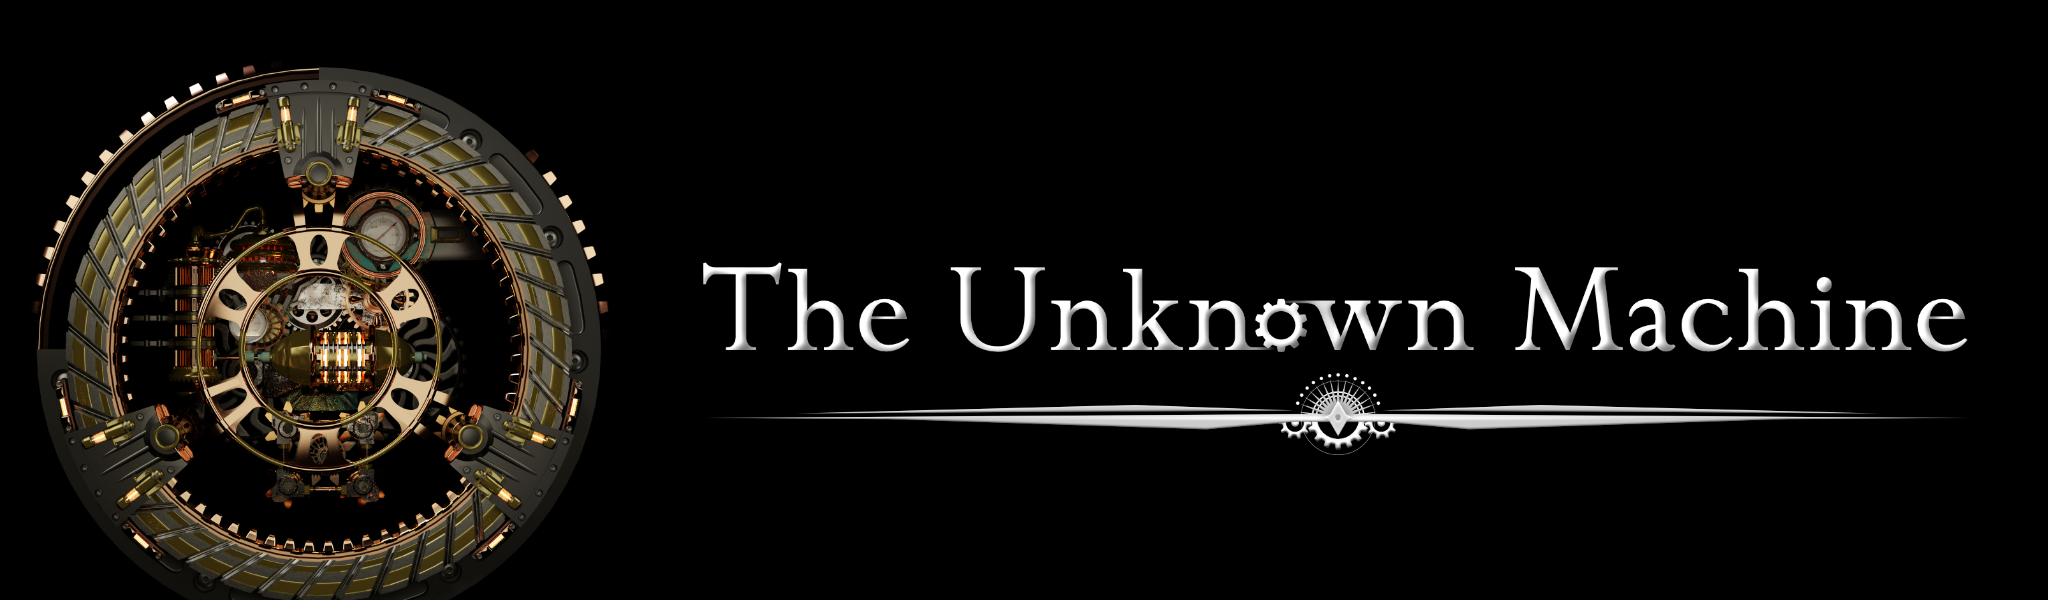 The Unknown Machine